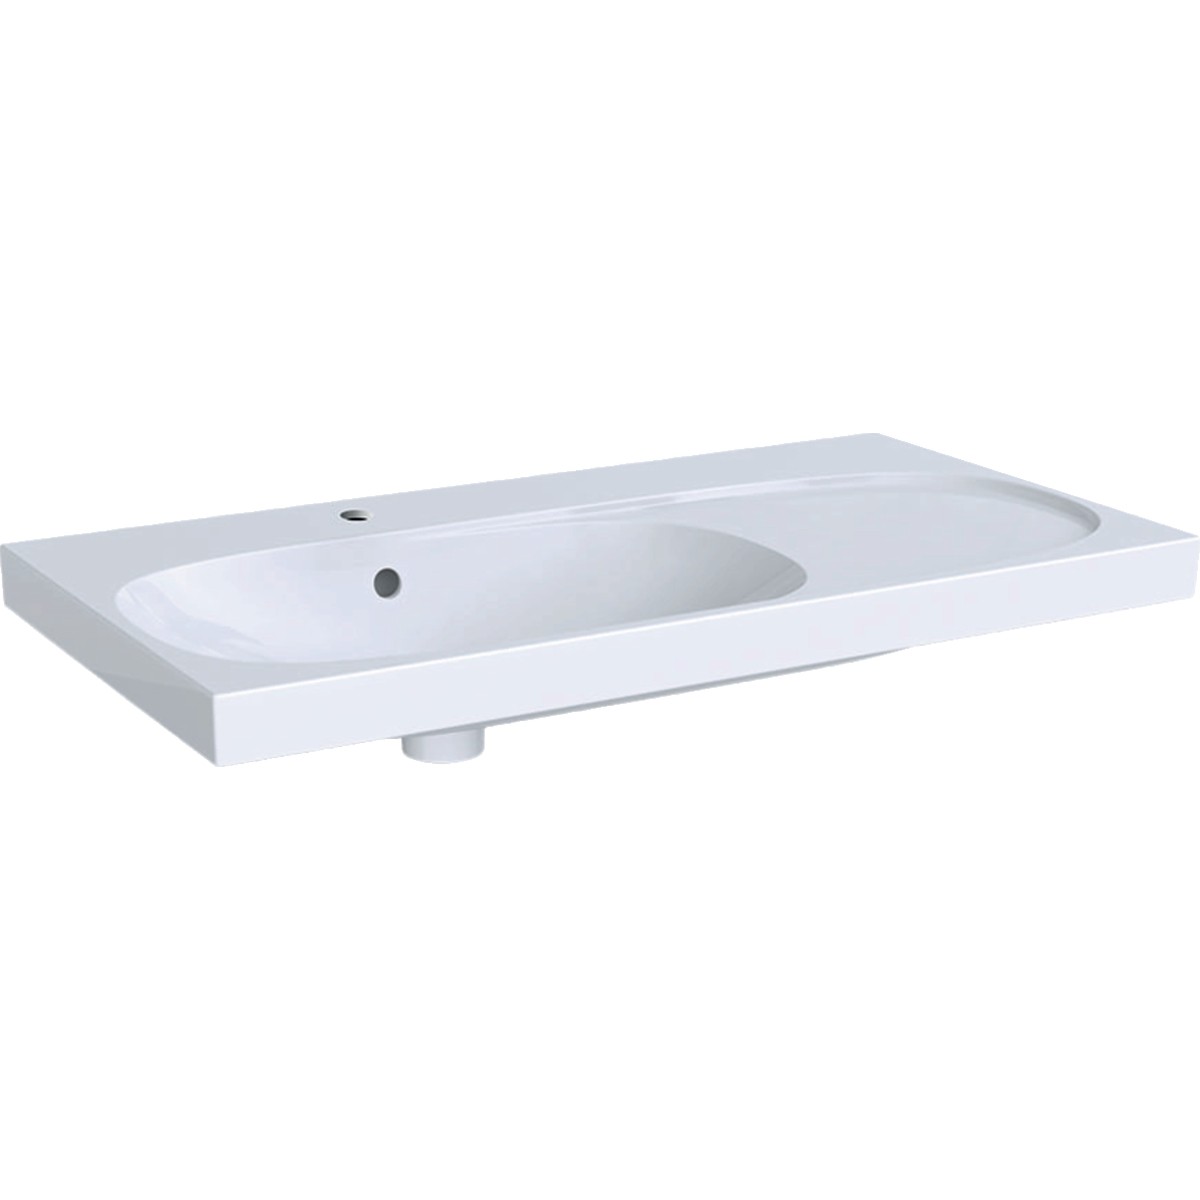 Geberit Acanto Basin with Shelf 90cm No tap hole - right hand shelf - White [500626012]